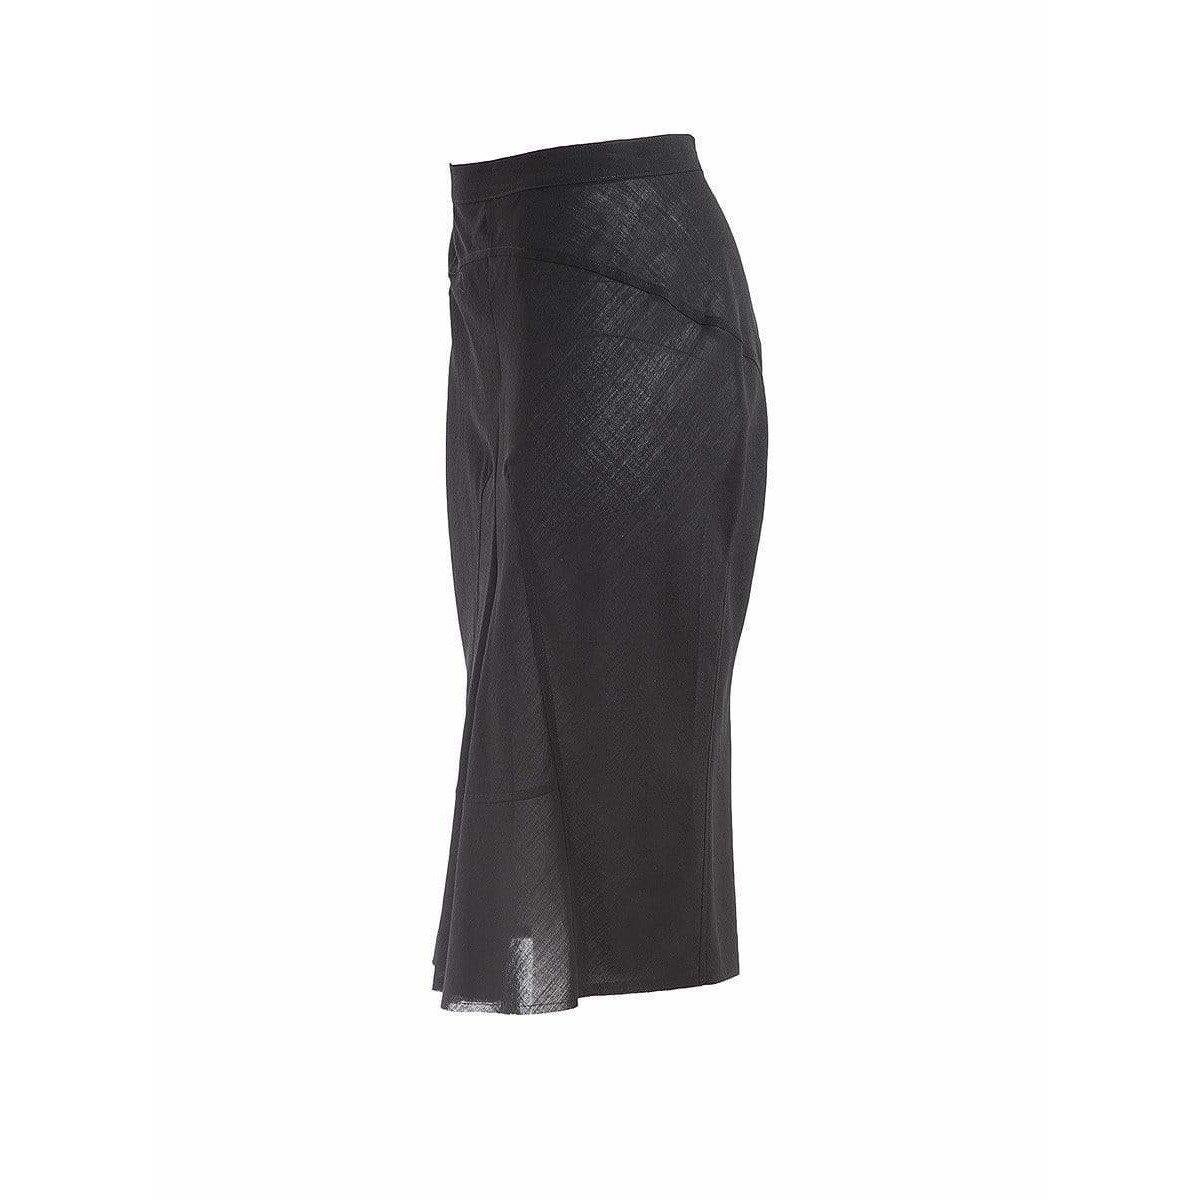 Asymmetrical black silk georgette midi skirt with tonal seams and an elastic waistband from Junya Watanabe. 